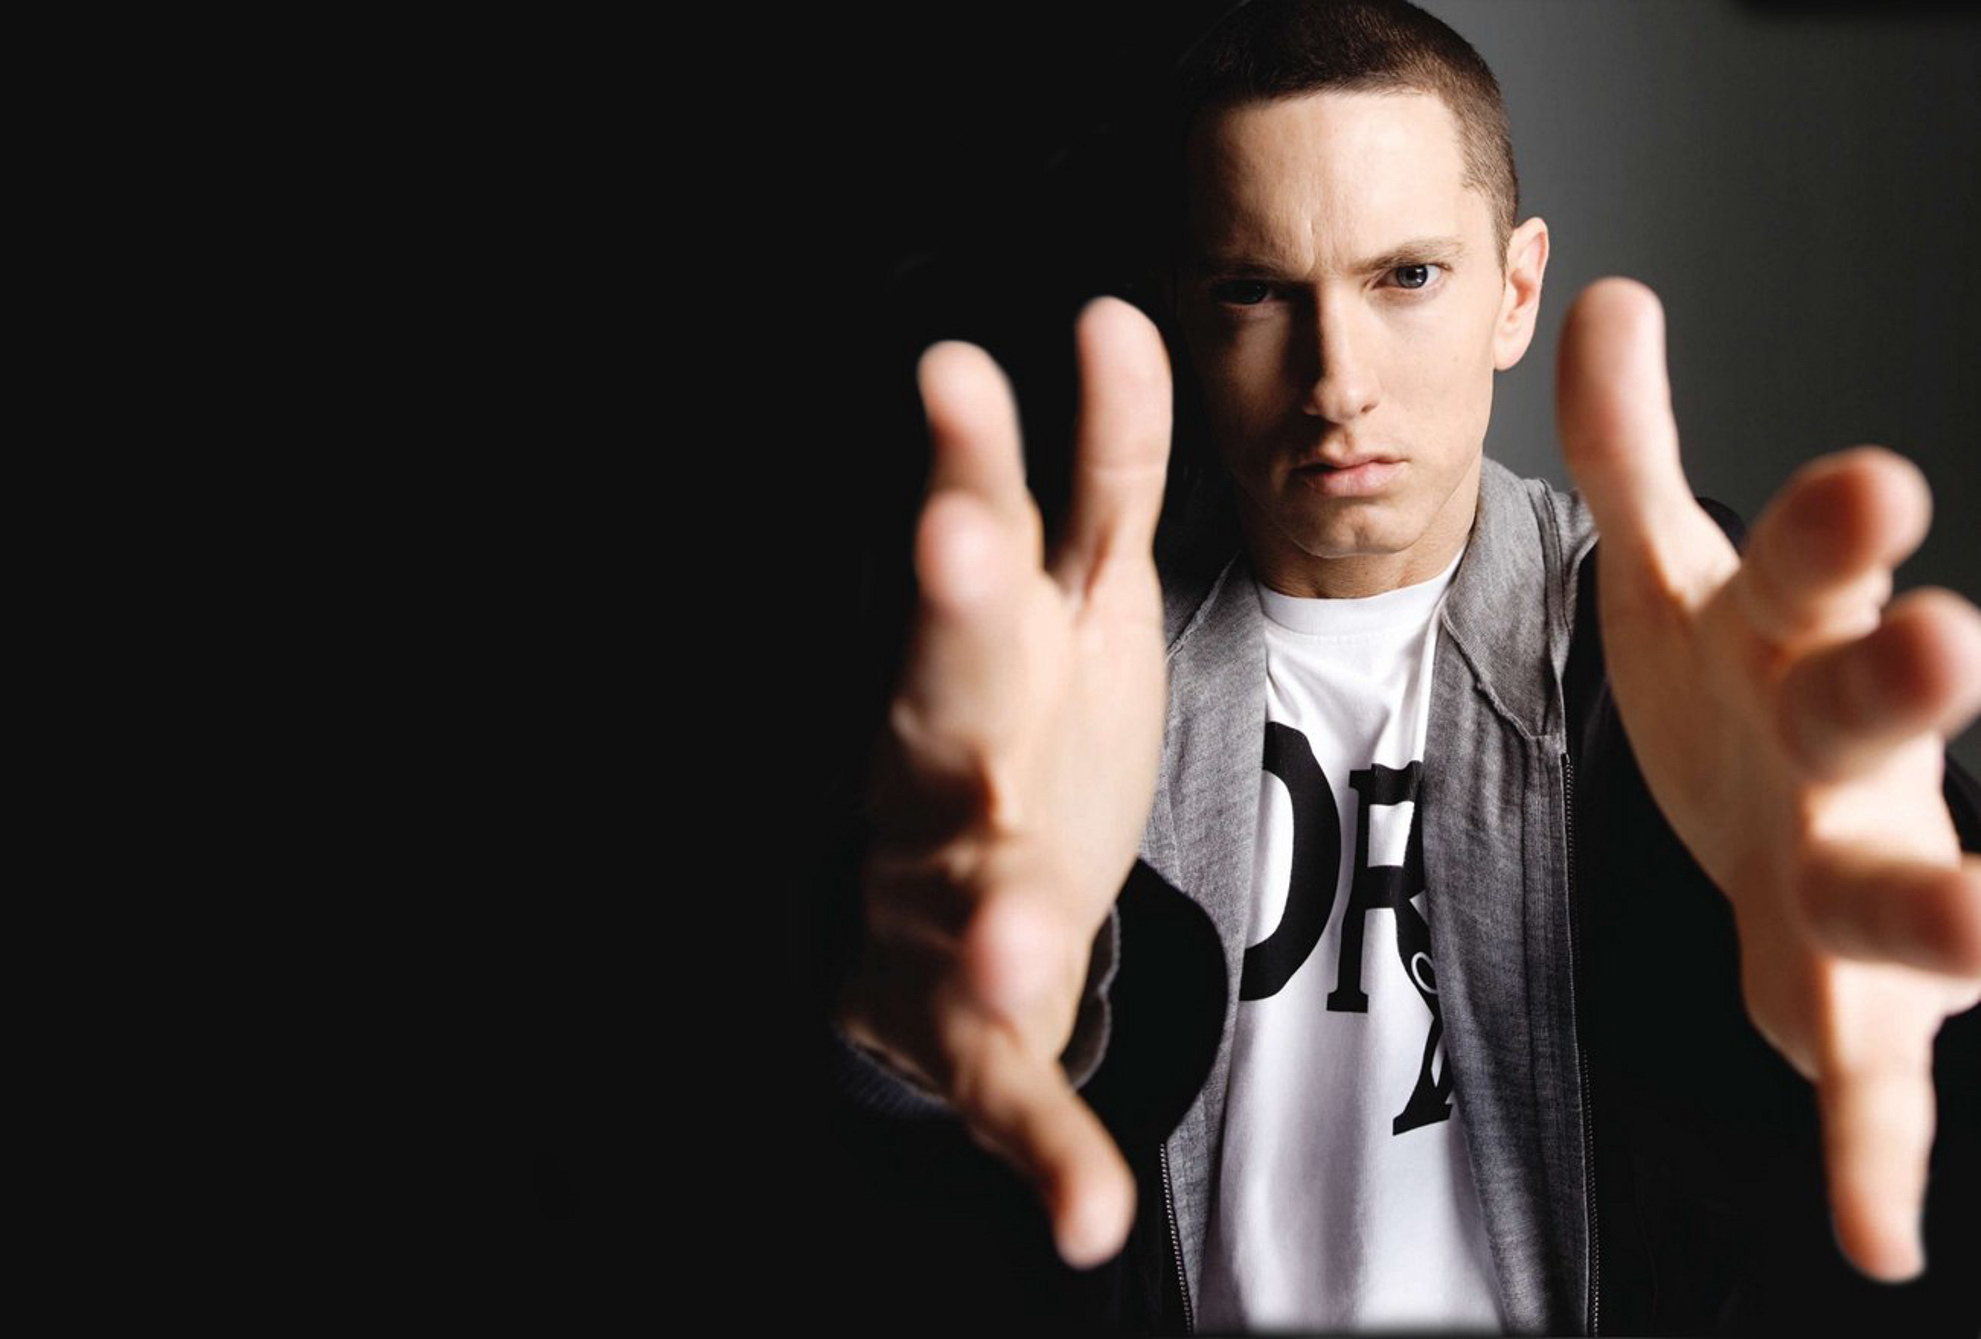 Gallery For Gt Eminem Wallpaper HD 1080p